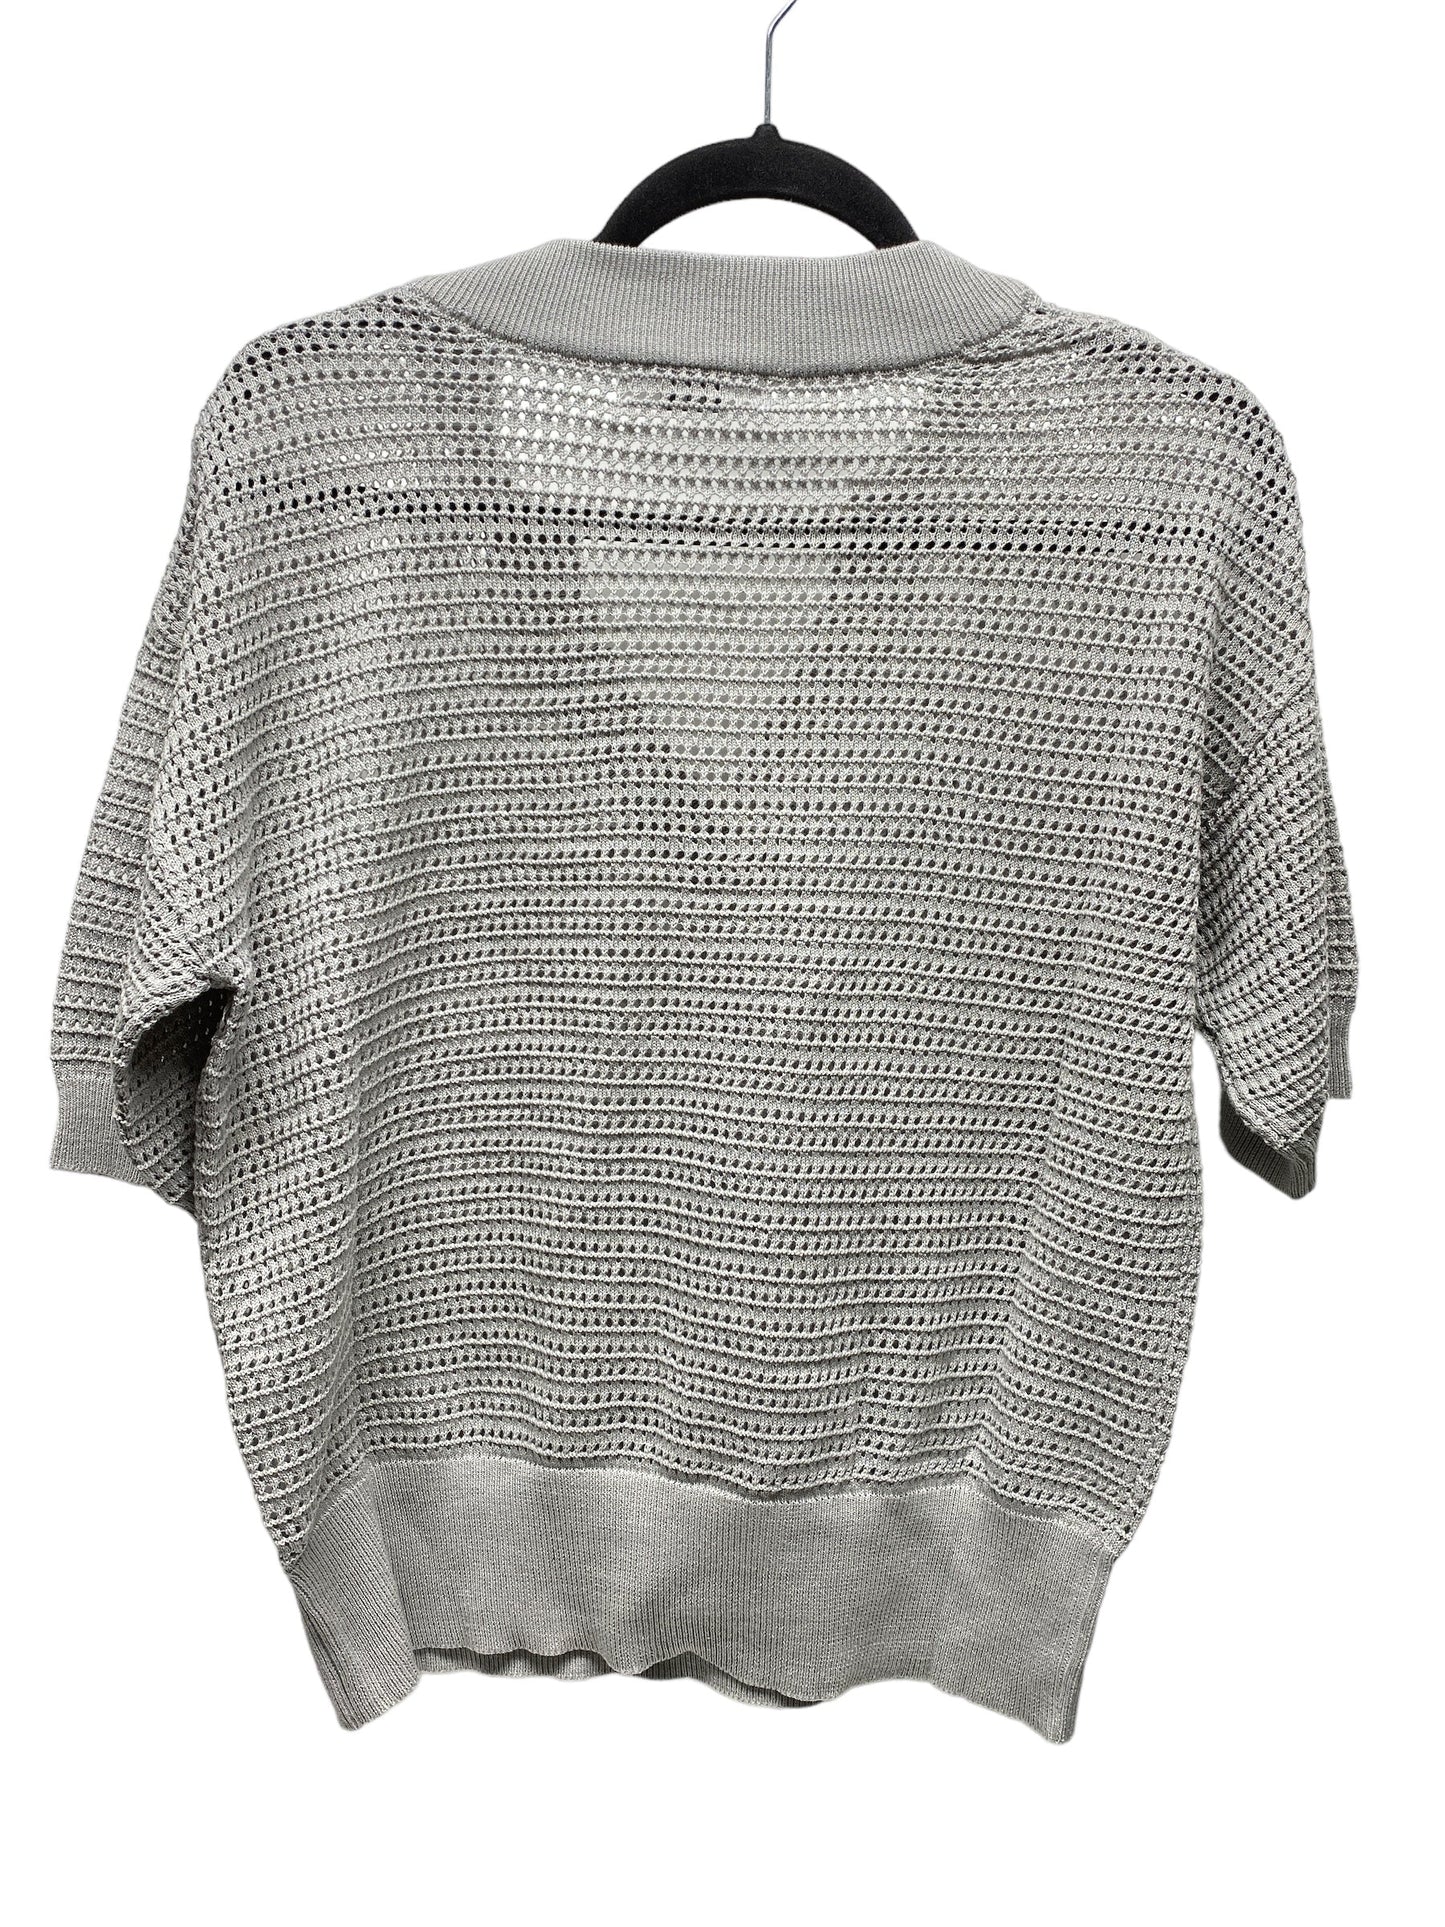 Sweater Short Sleeve By Jenisso  Size: S